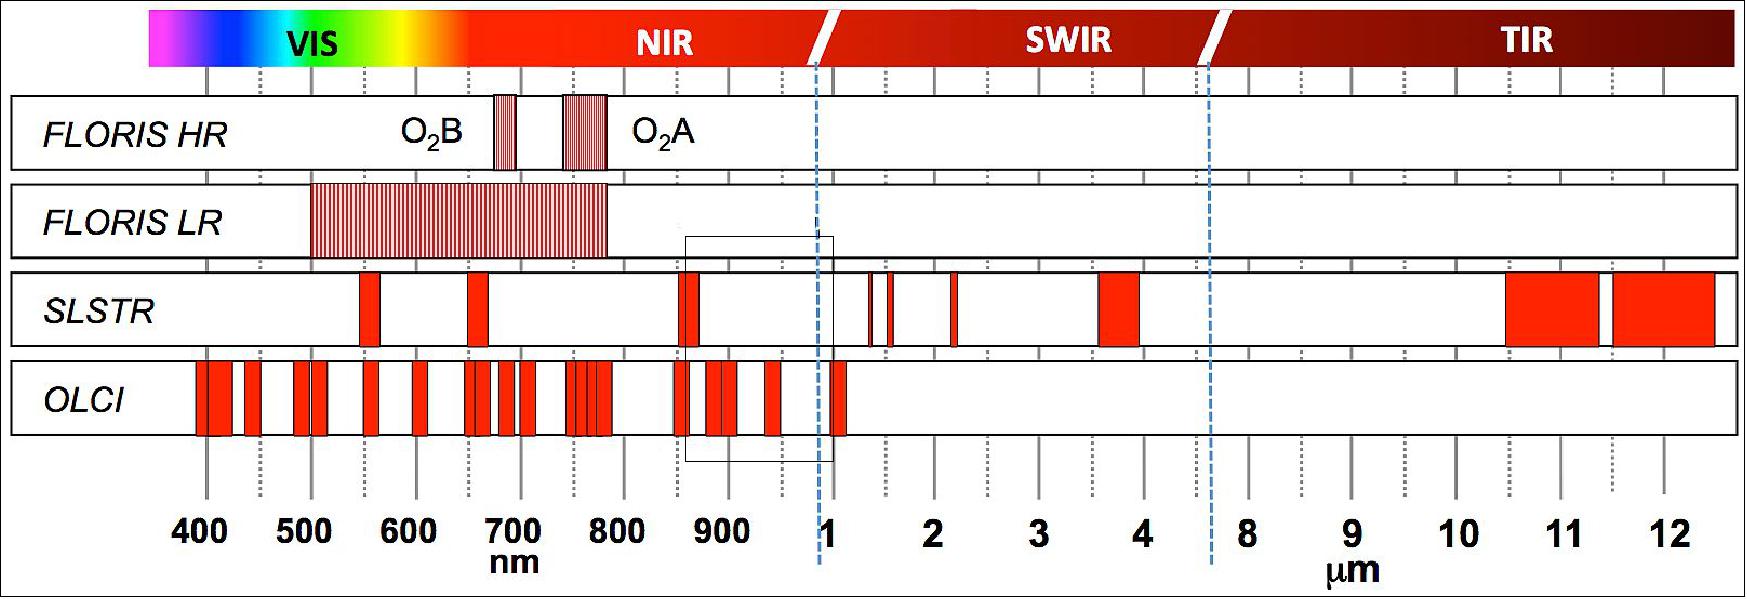 Figure 10: Comparison of FLORIS spectral ranges and Sentinel-3 instrument bands (image credit: ESA)